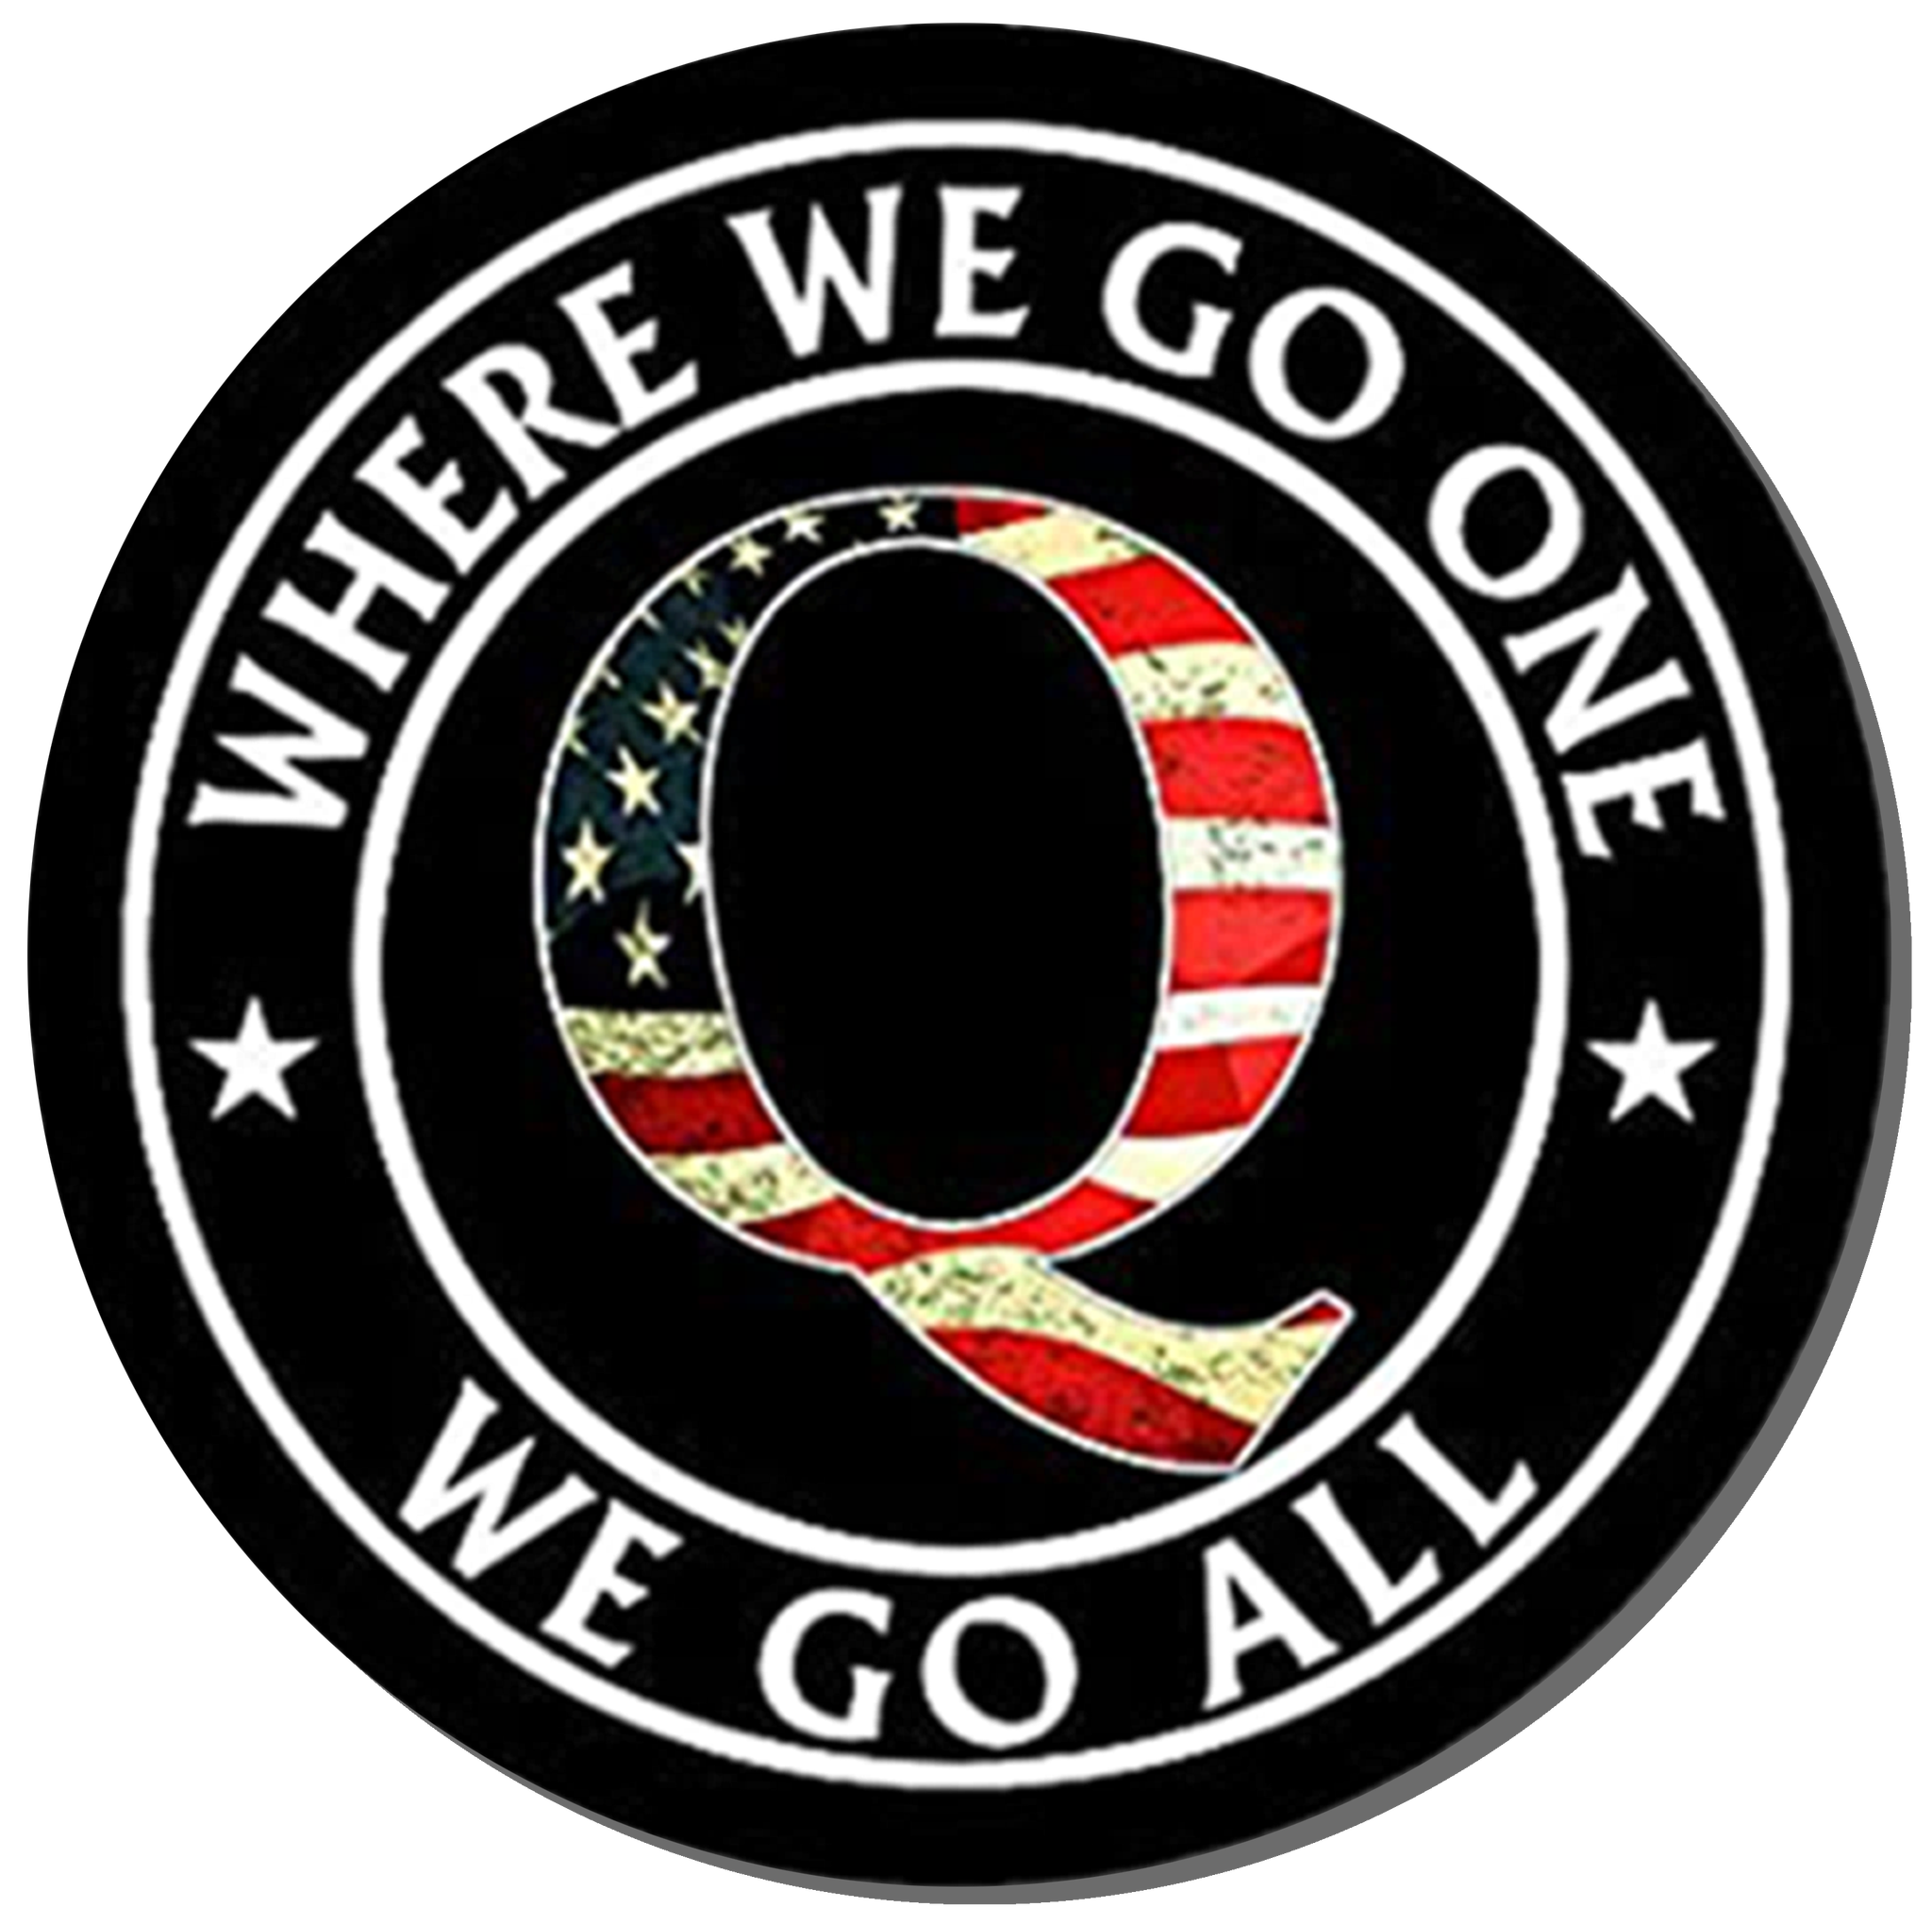 Q One All Go-USA Klistermärke